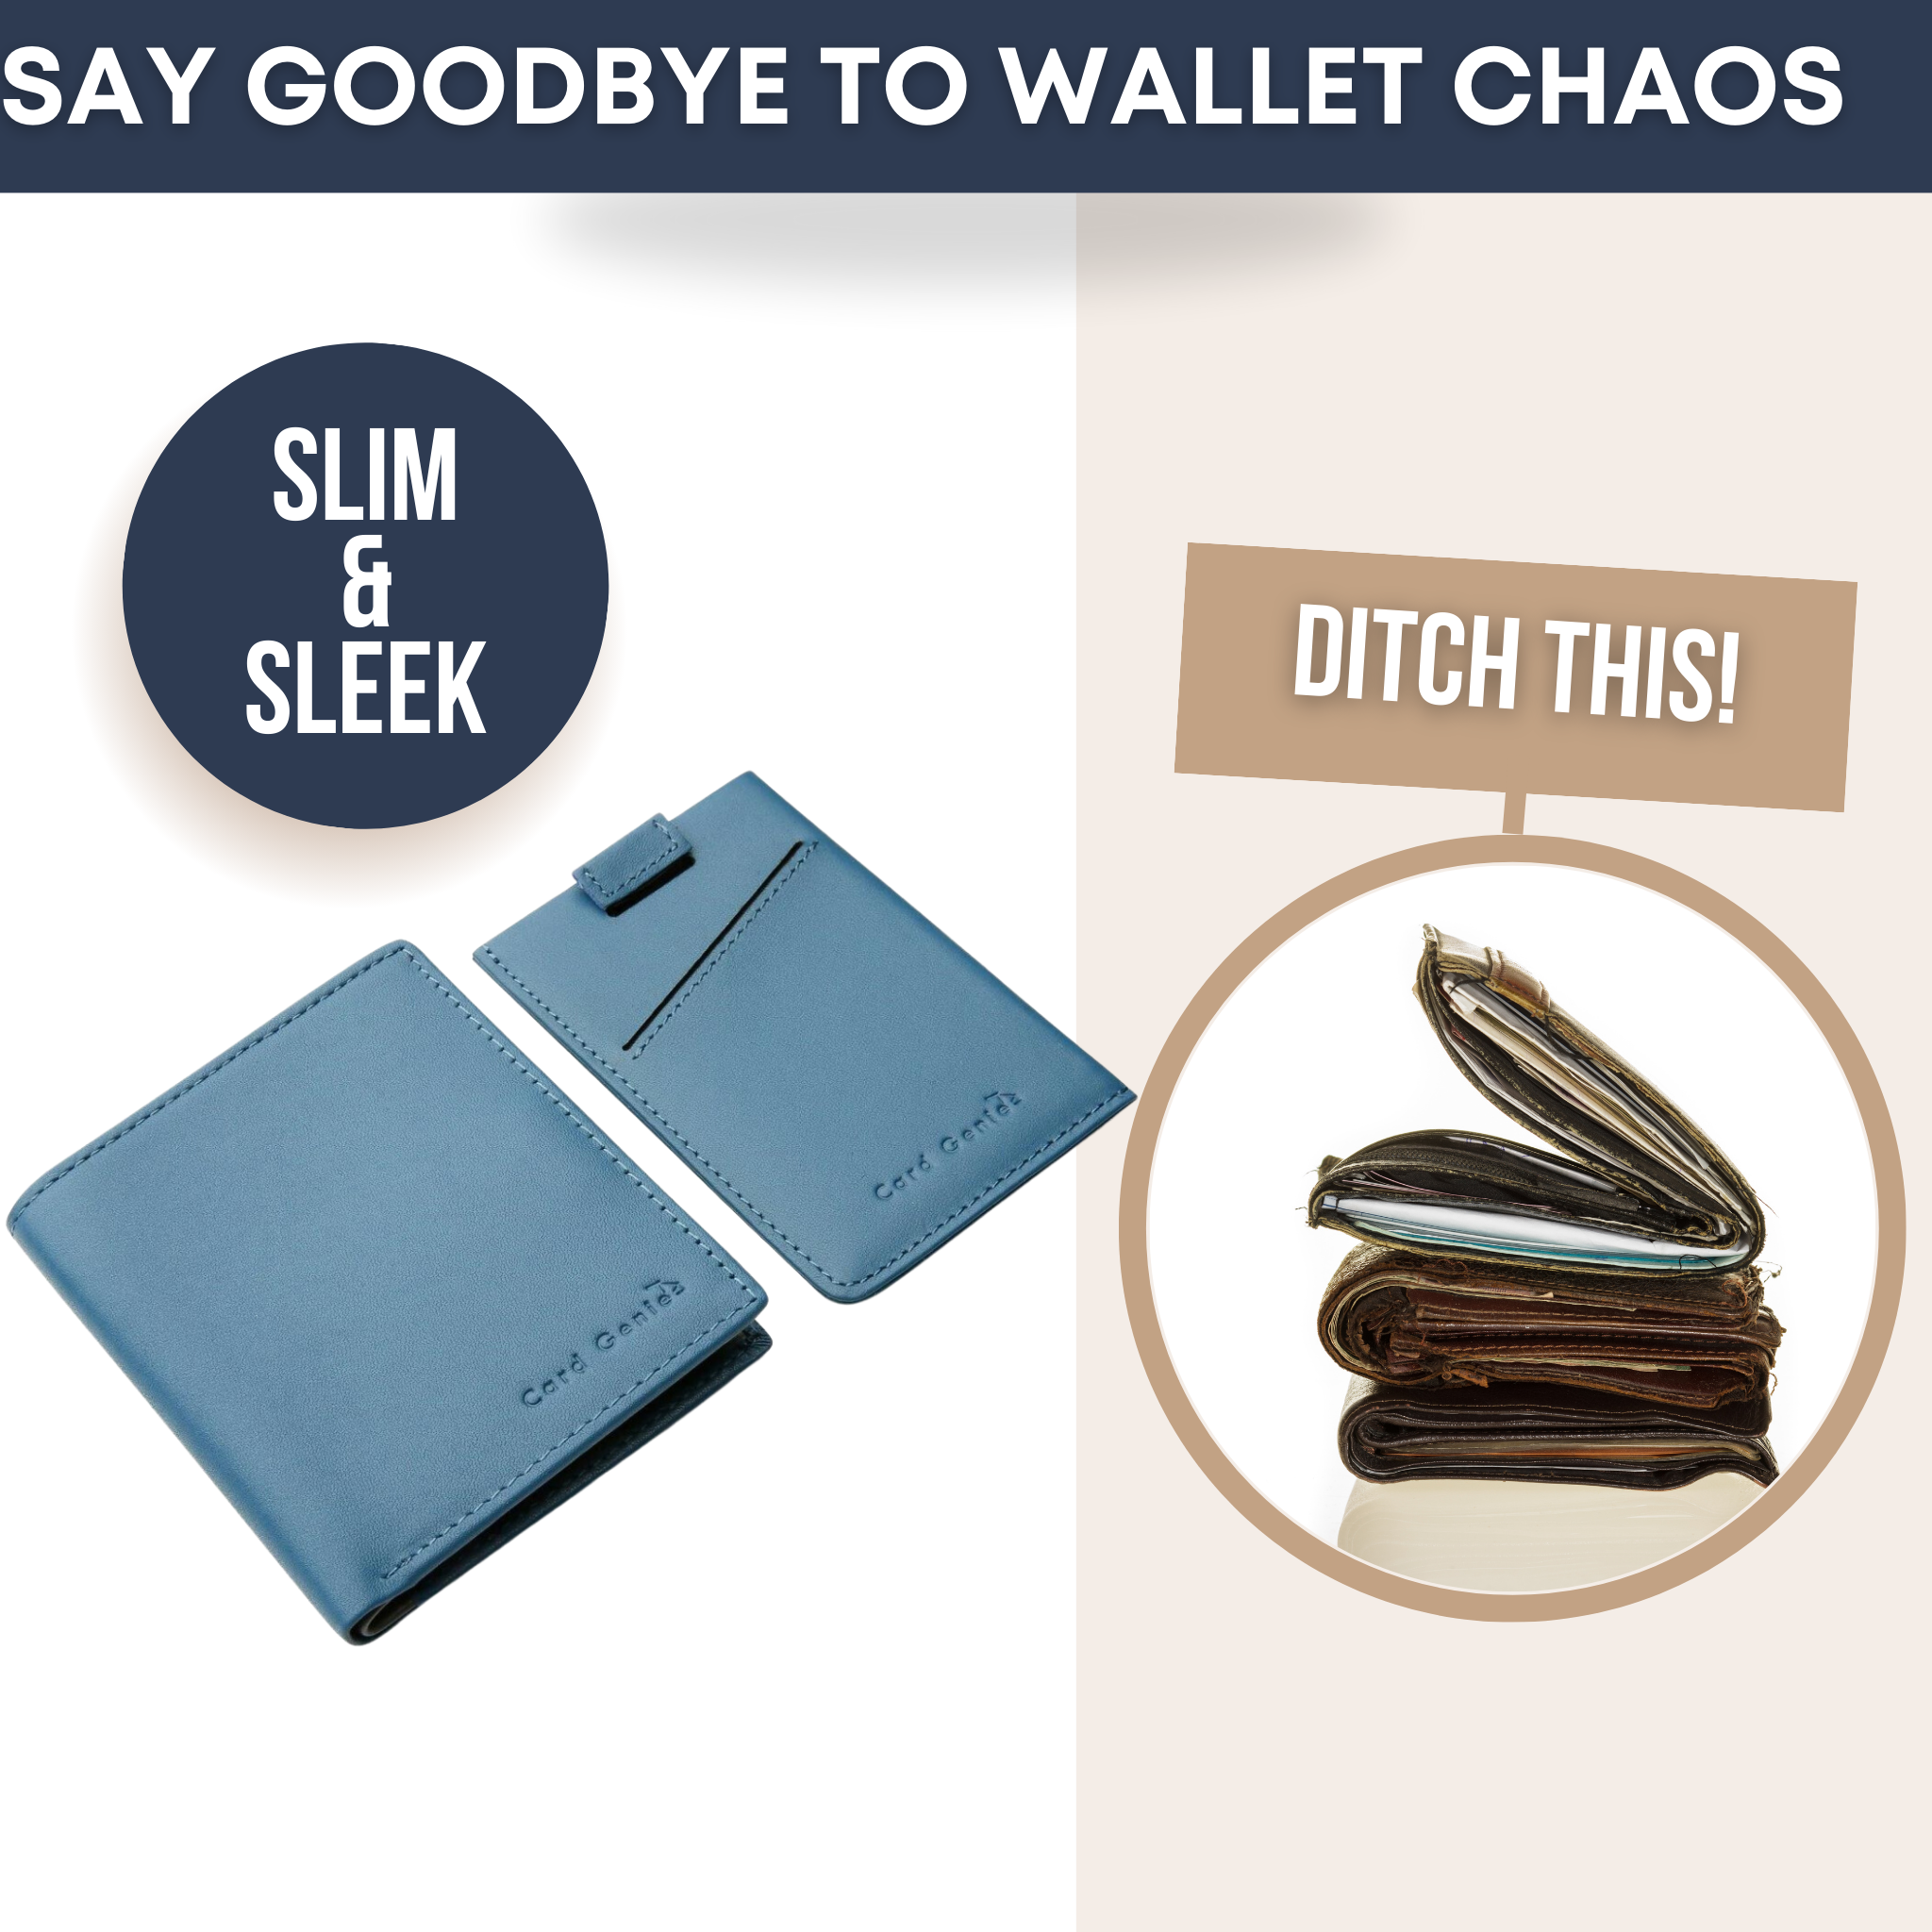 Card Genie Duo Vault Set - Leather Bifold Wallet & Slim Card Holder Set| 14 Card & Cash